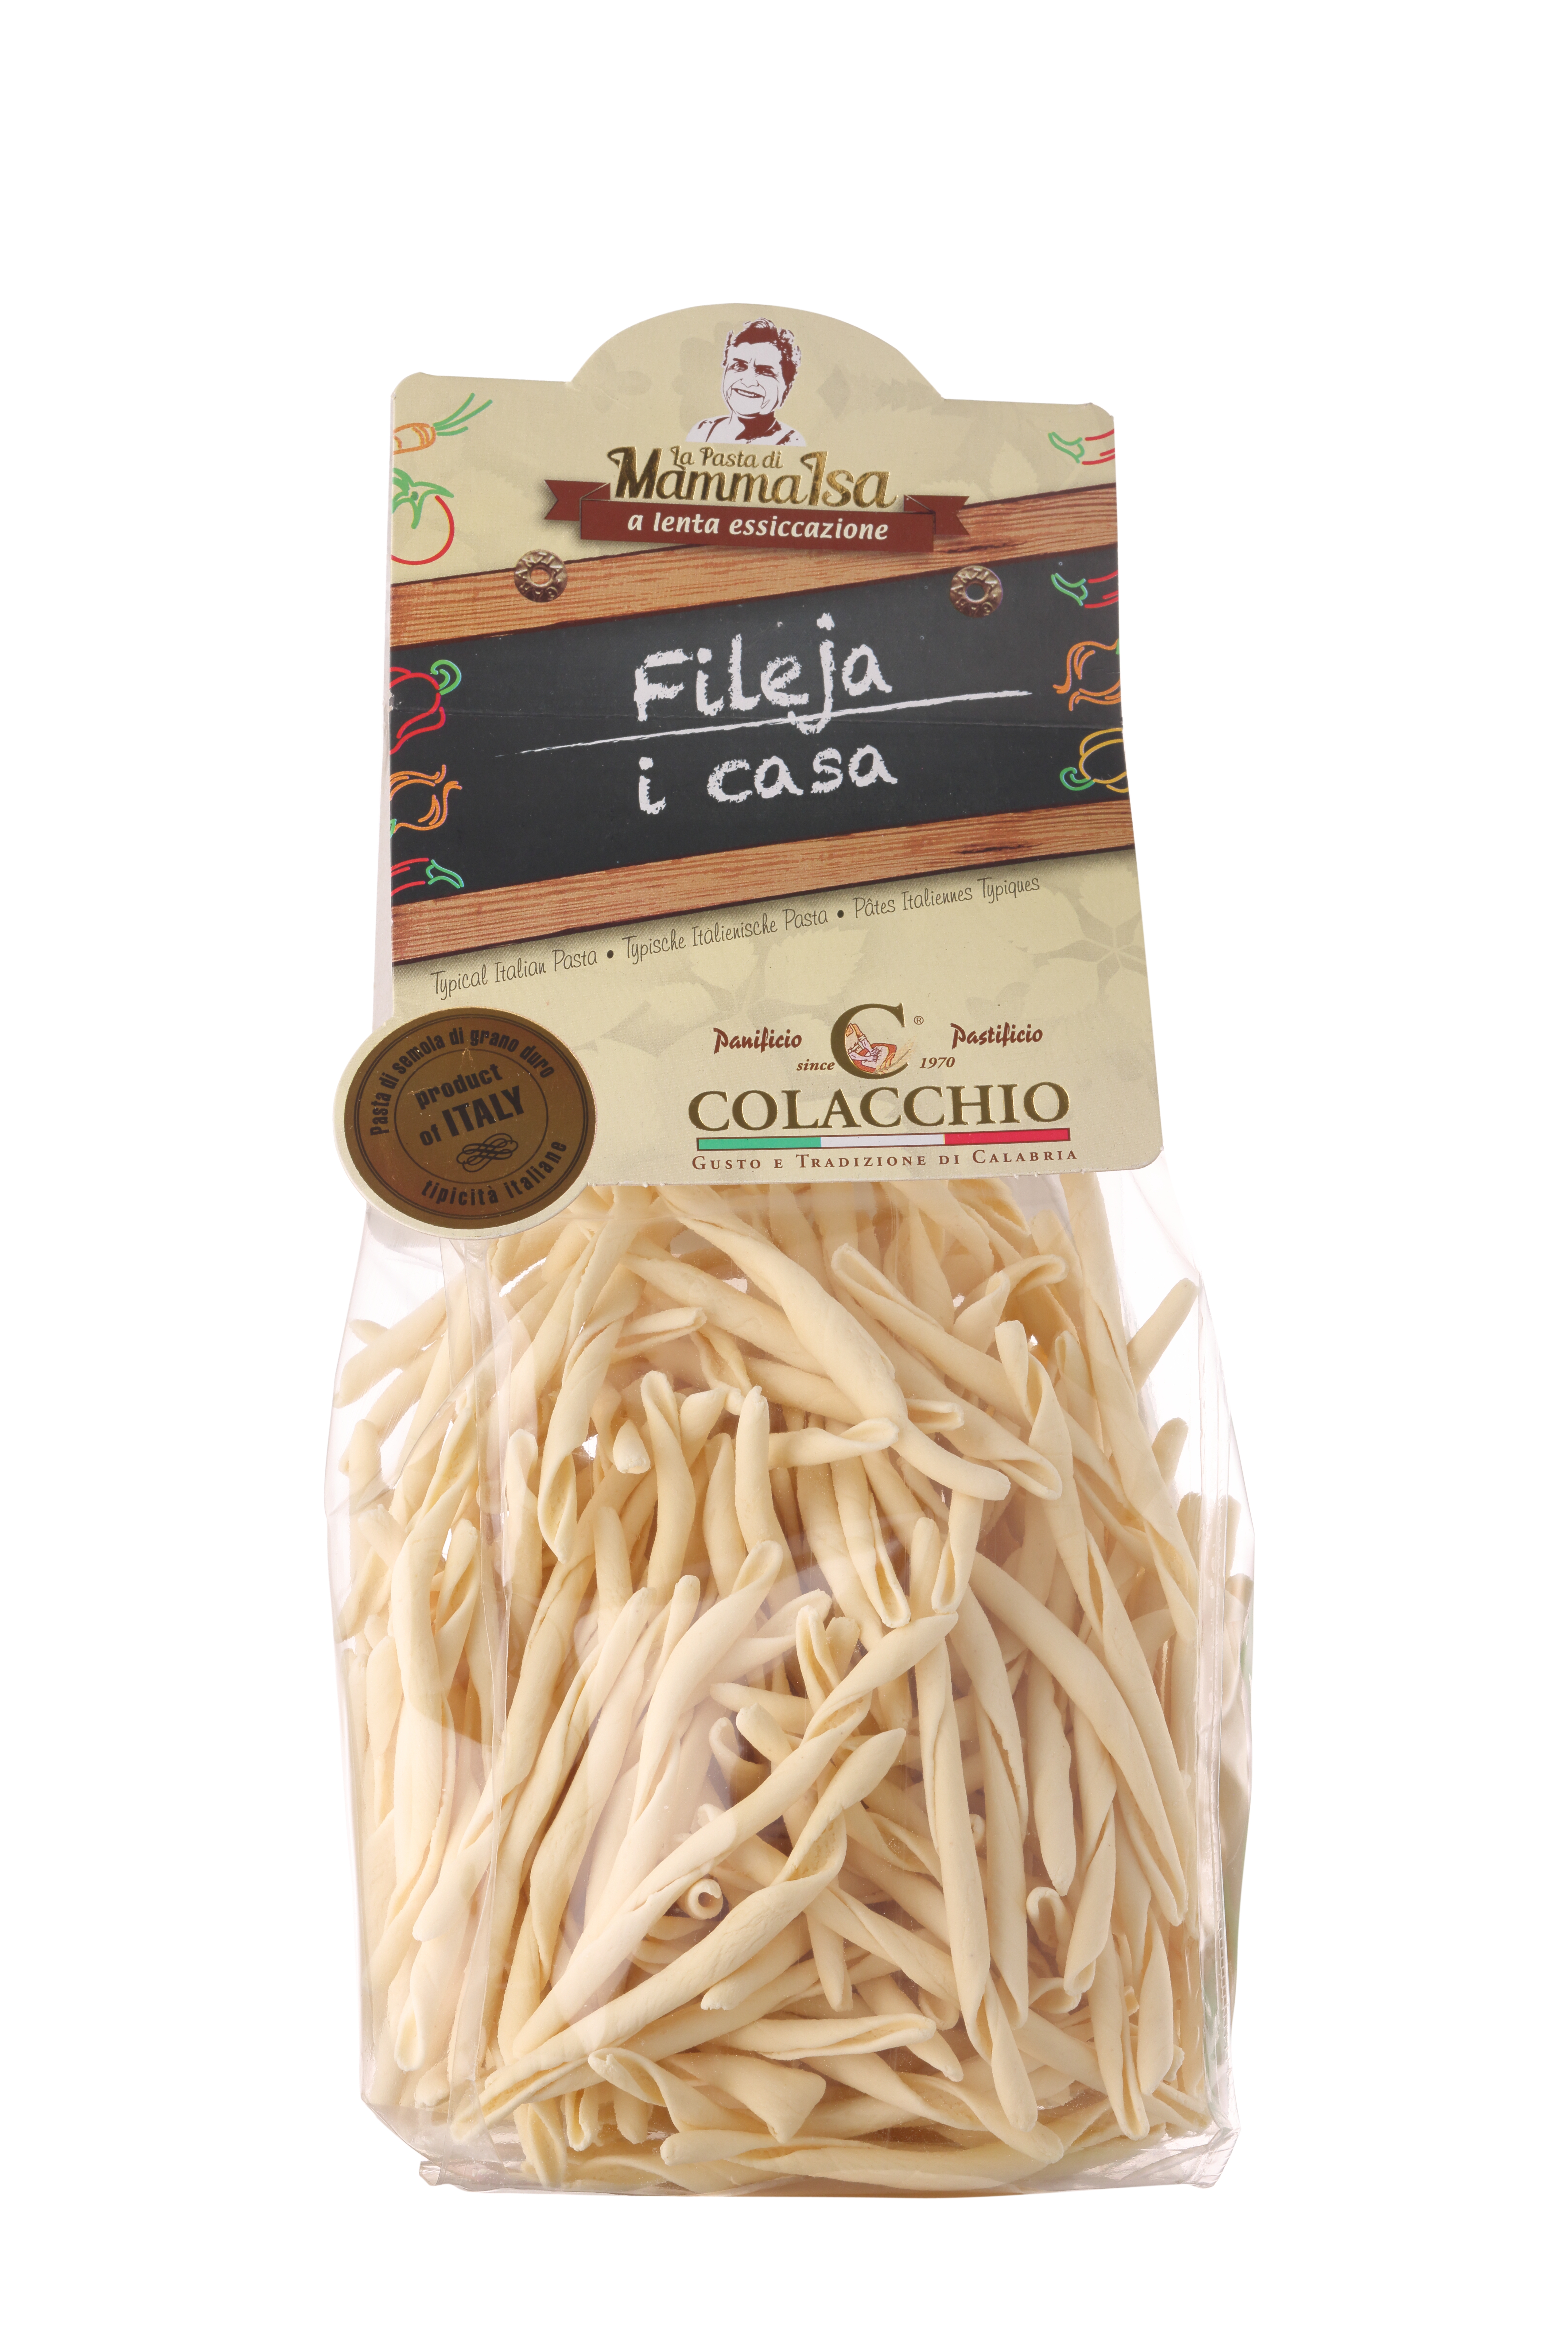 Colacchio, "Fileja I Casa" Pasta, 500g